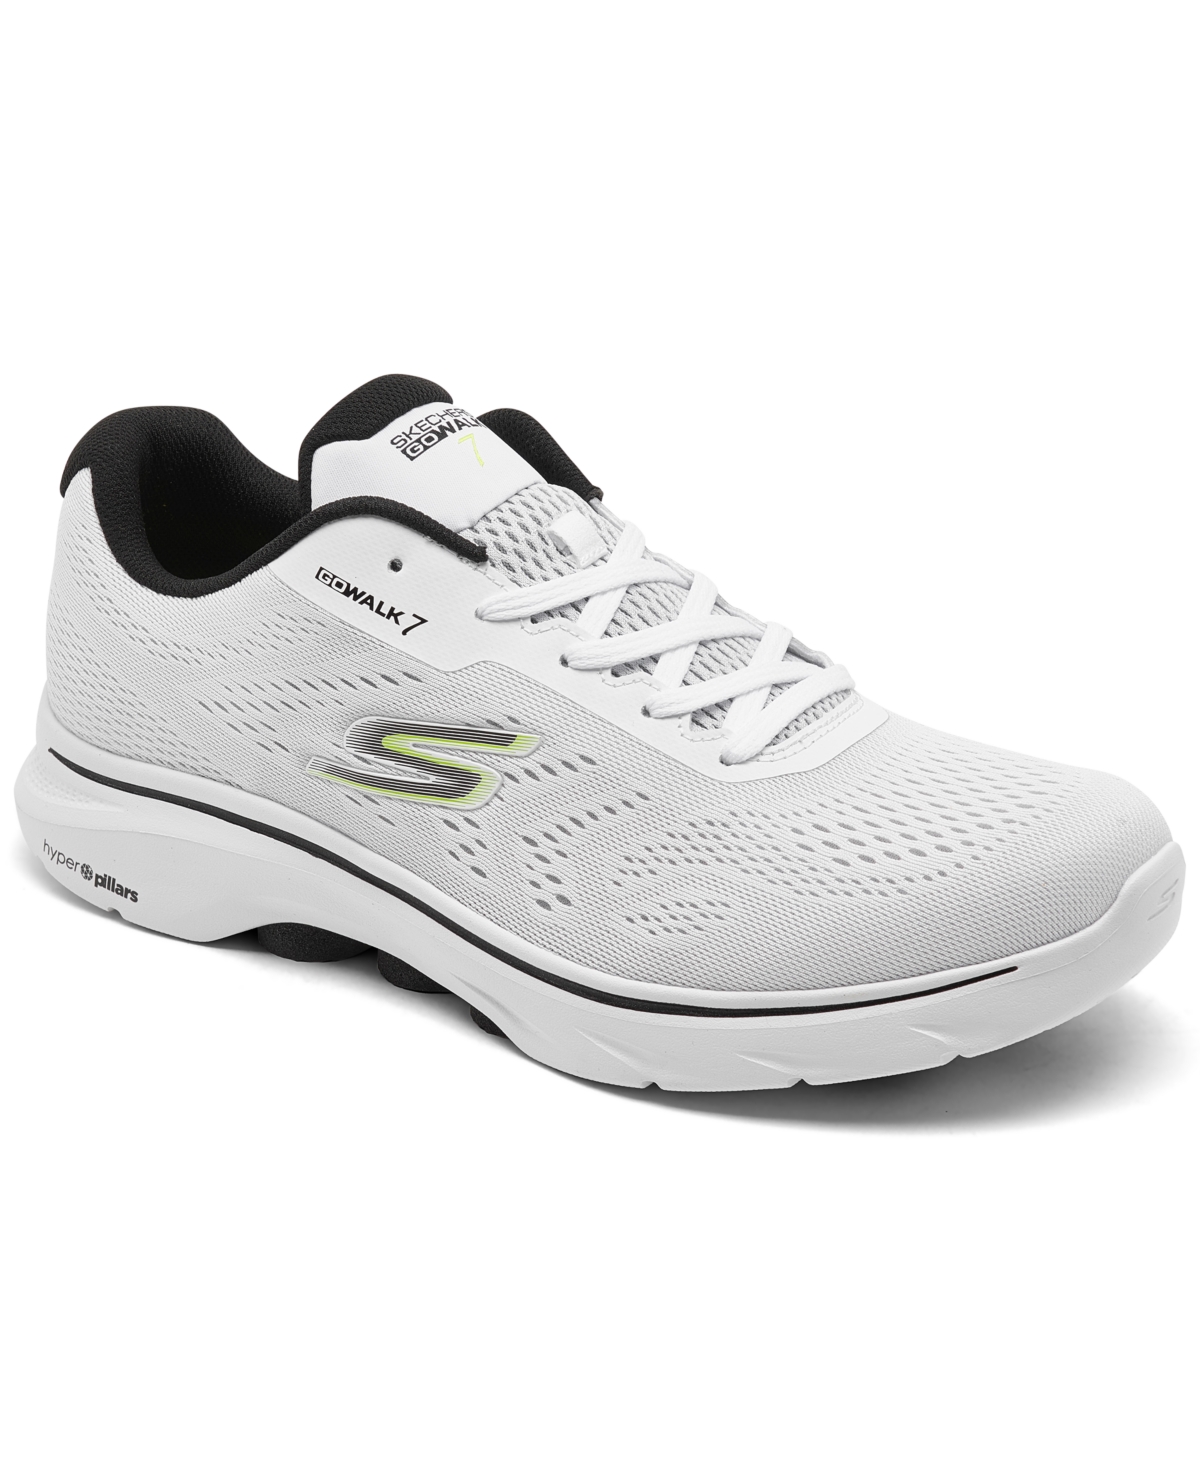 Men's Go Walk 7 - Avalo 2 Athletic Walking Sneakers from Finish Line - White/white